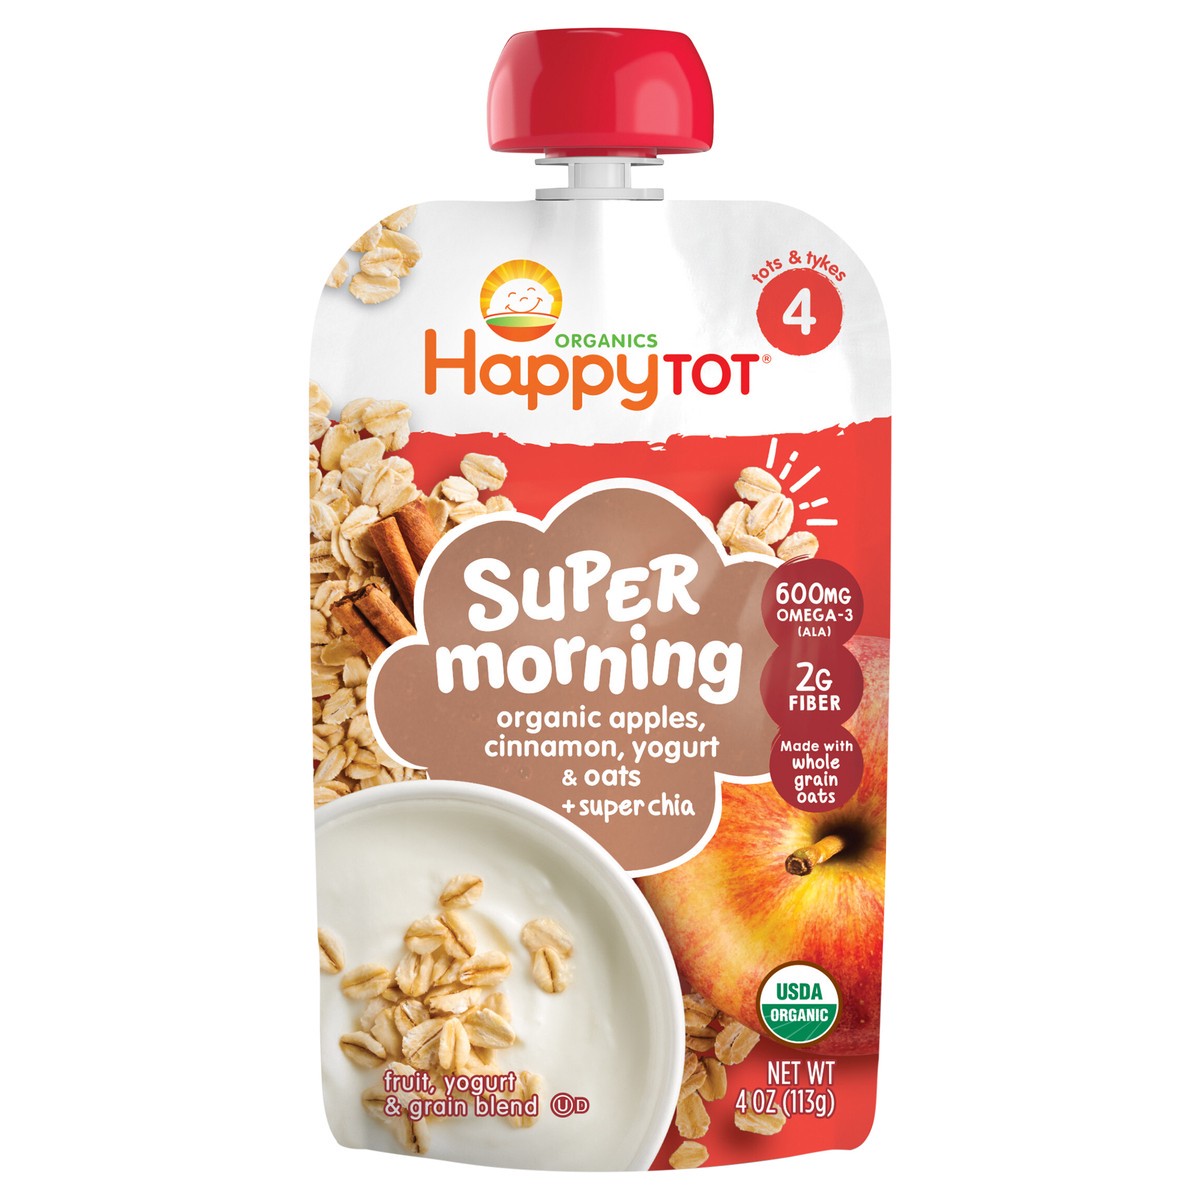 slide 1 of 1, Happy Tot Happy Family HappyTot Super Morning Organic Apples Cinnamon Yogurt & Oats with Superchia Baby Food Pouch - 4oz, 4 oz